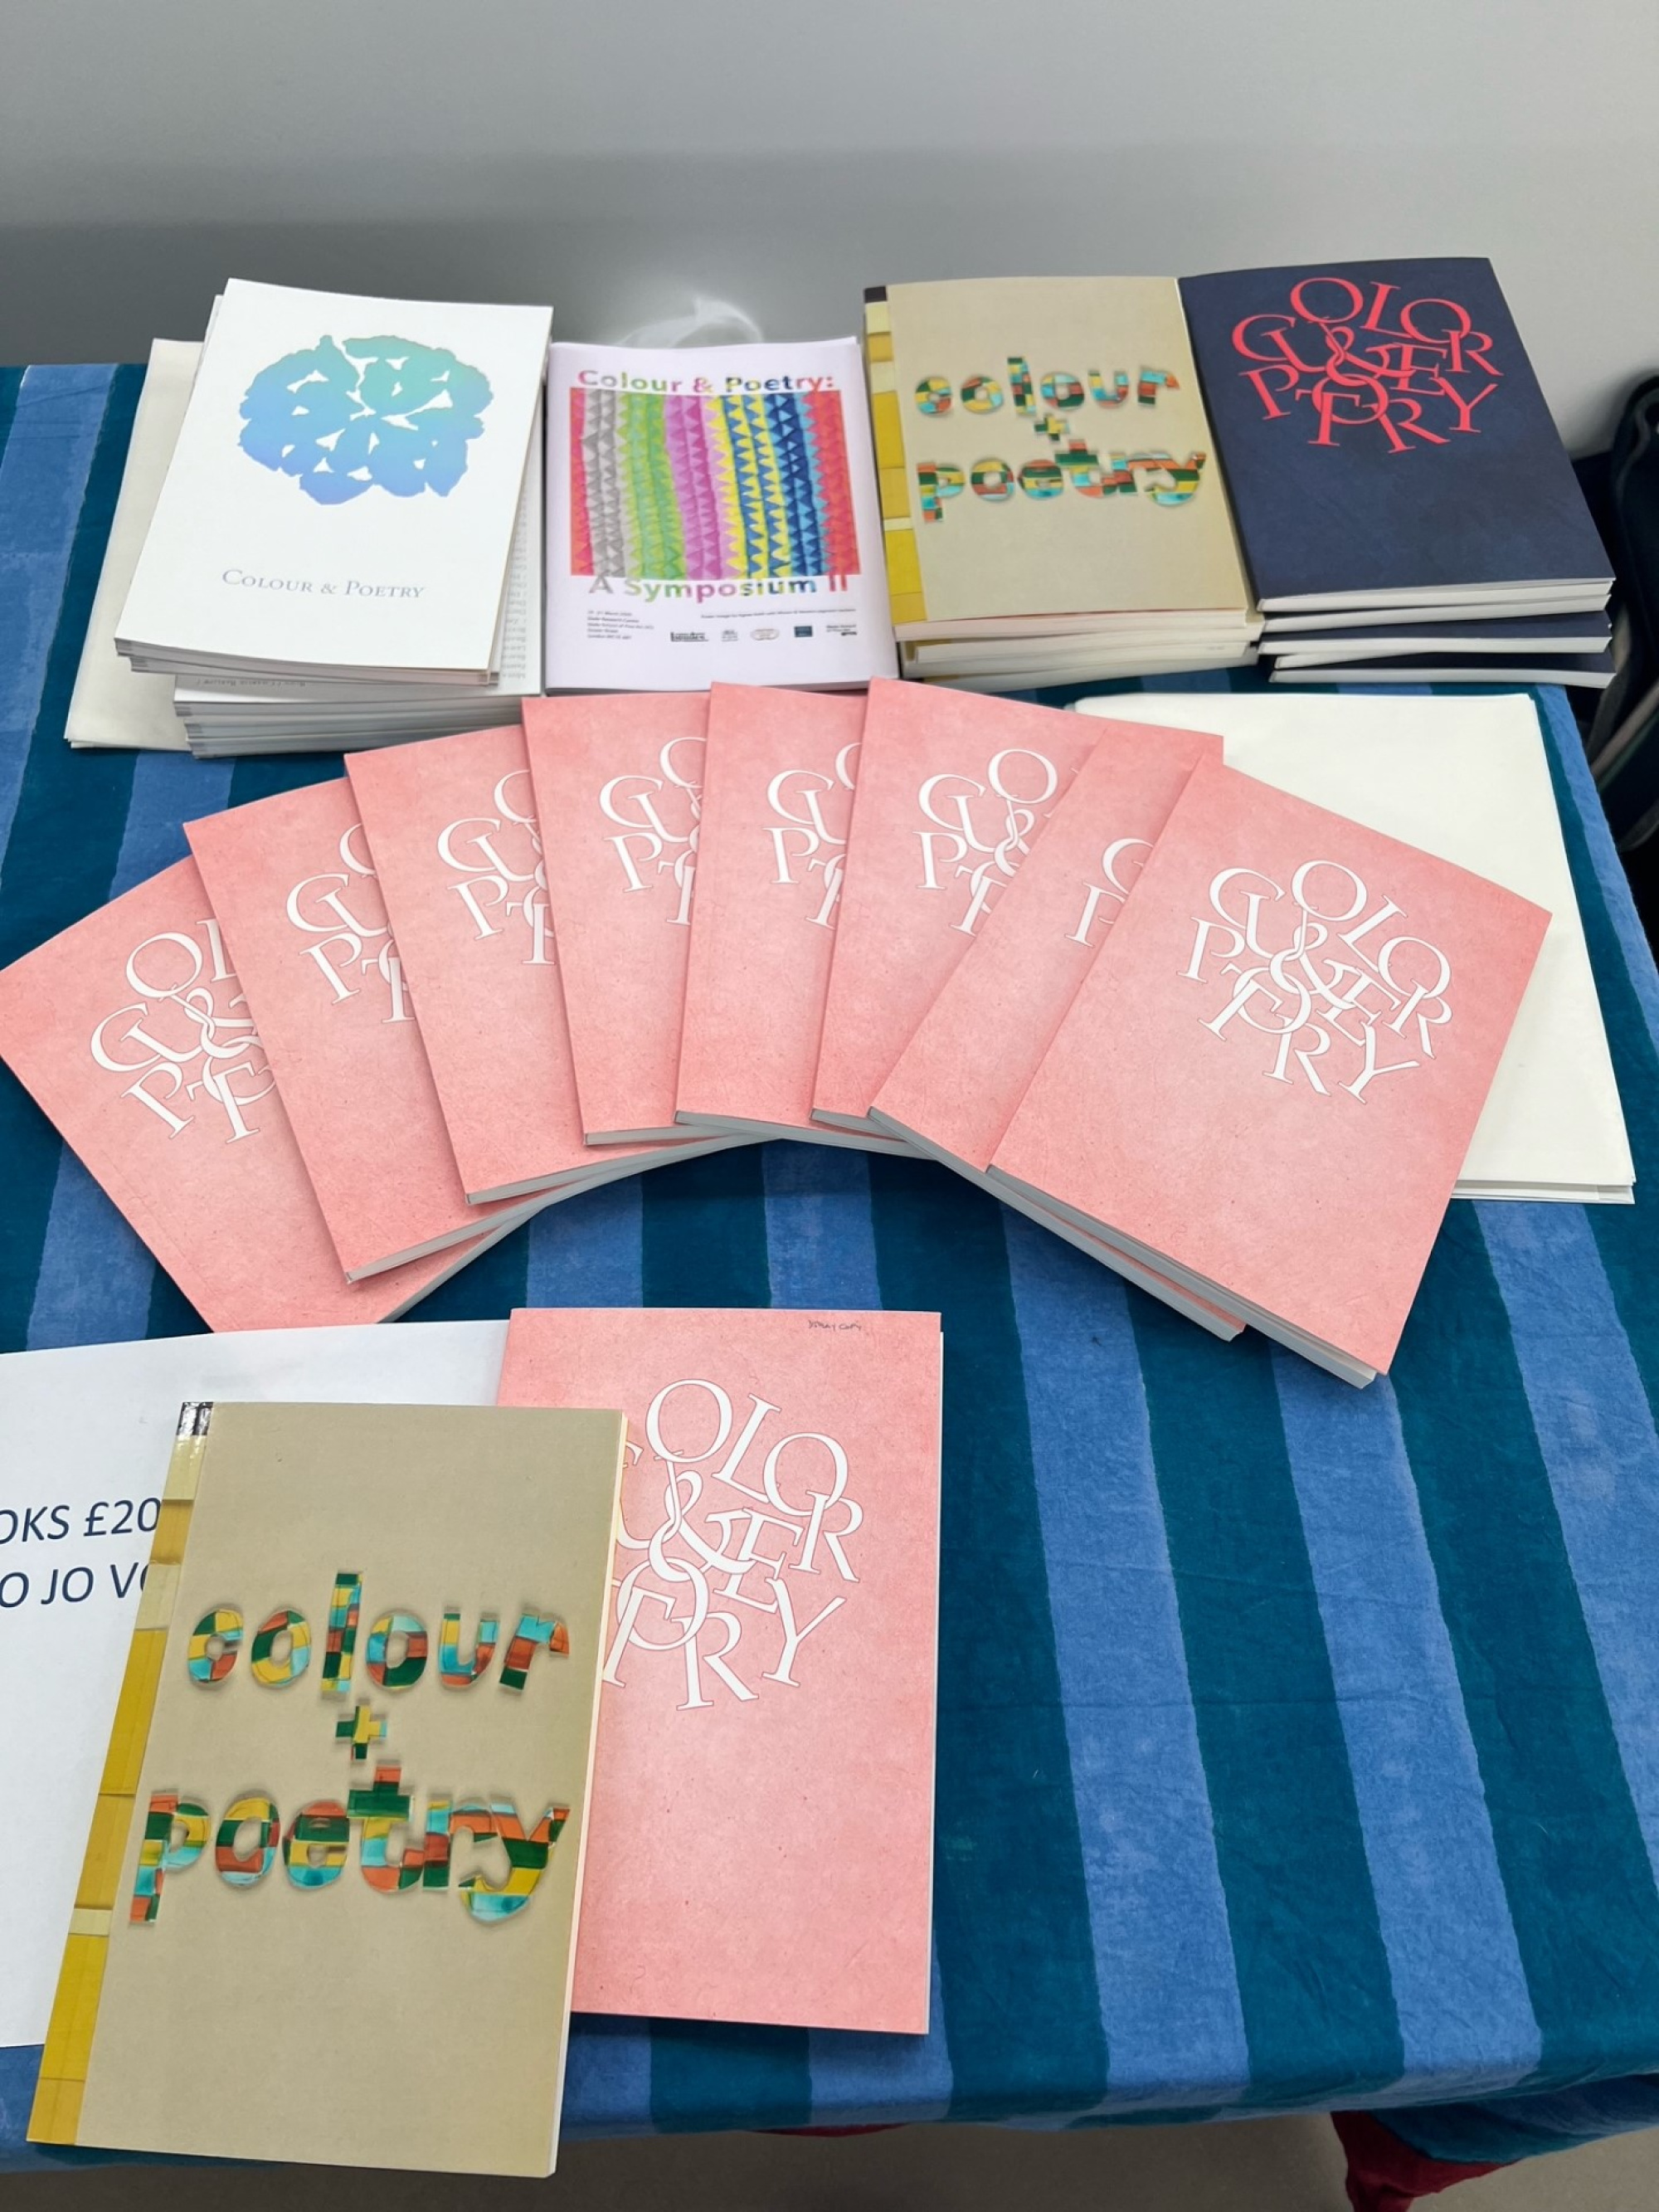 Colour &amp; Poetry: A Symposium V publication launch